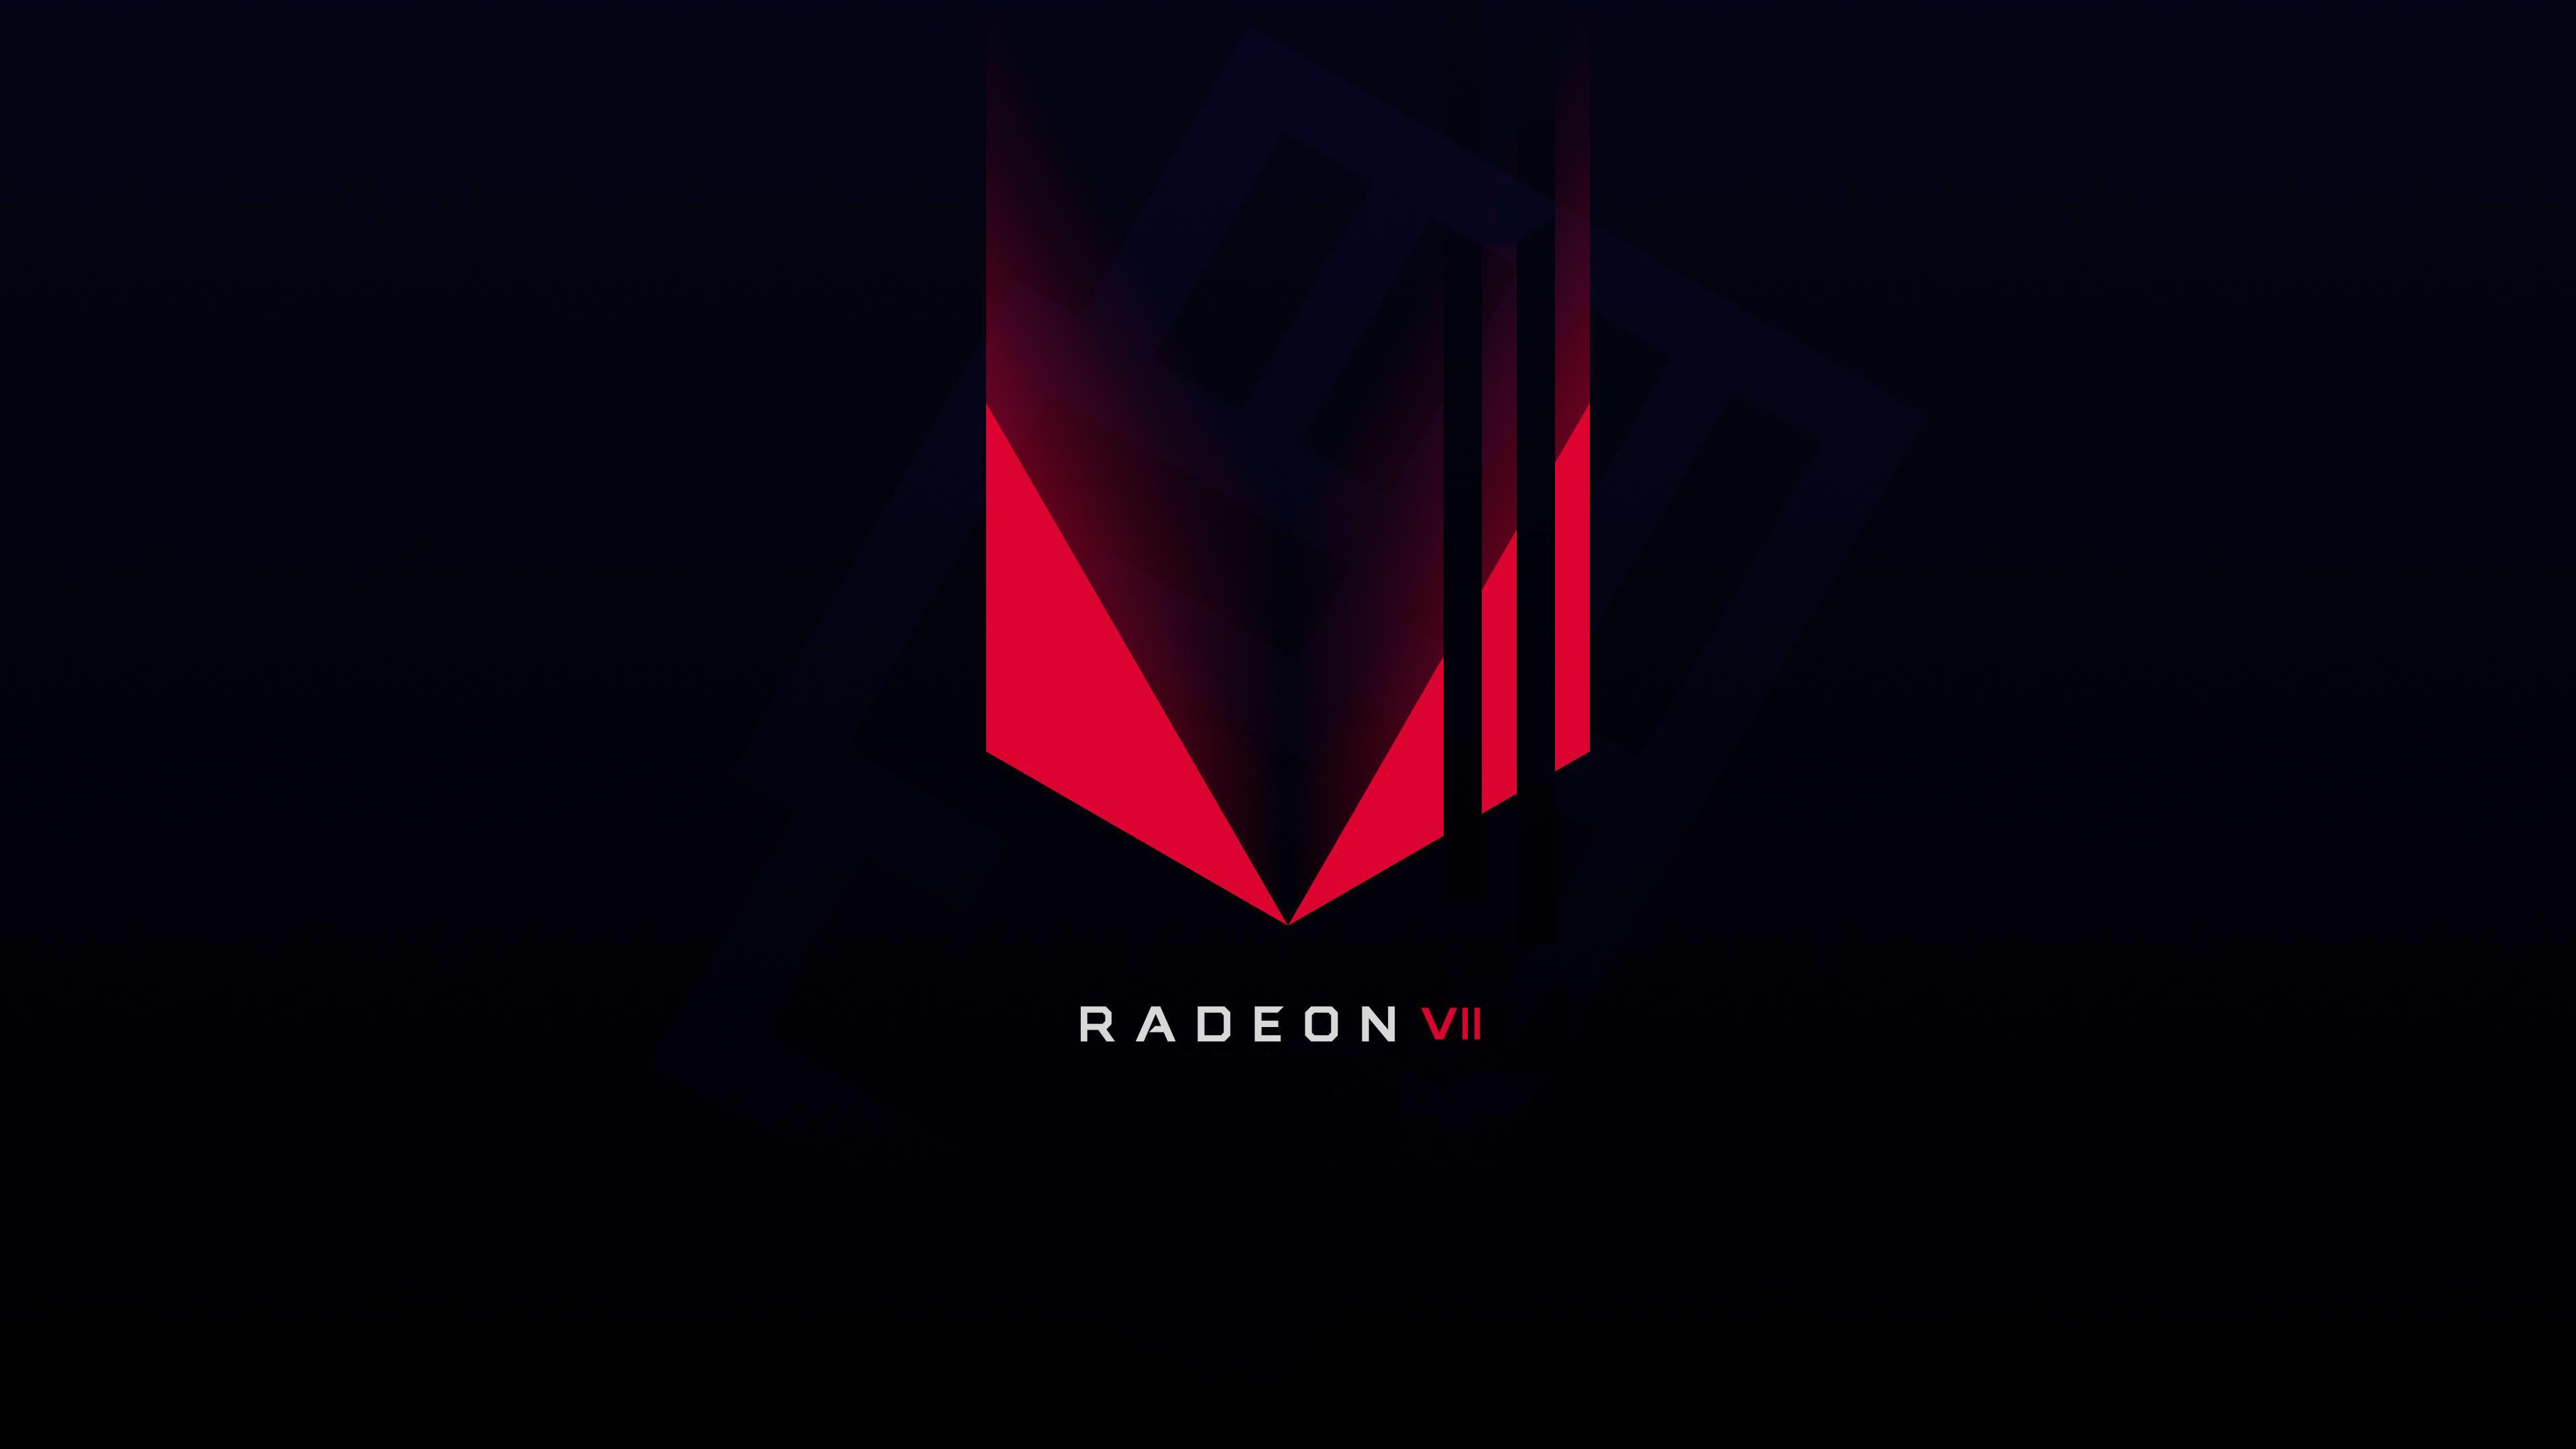 A Radeon VII edit of one of my favorite Vega Wallpaper